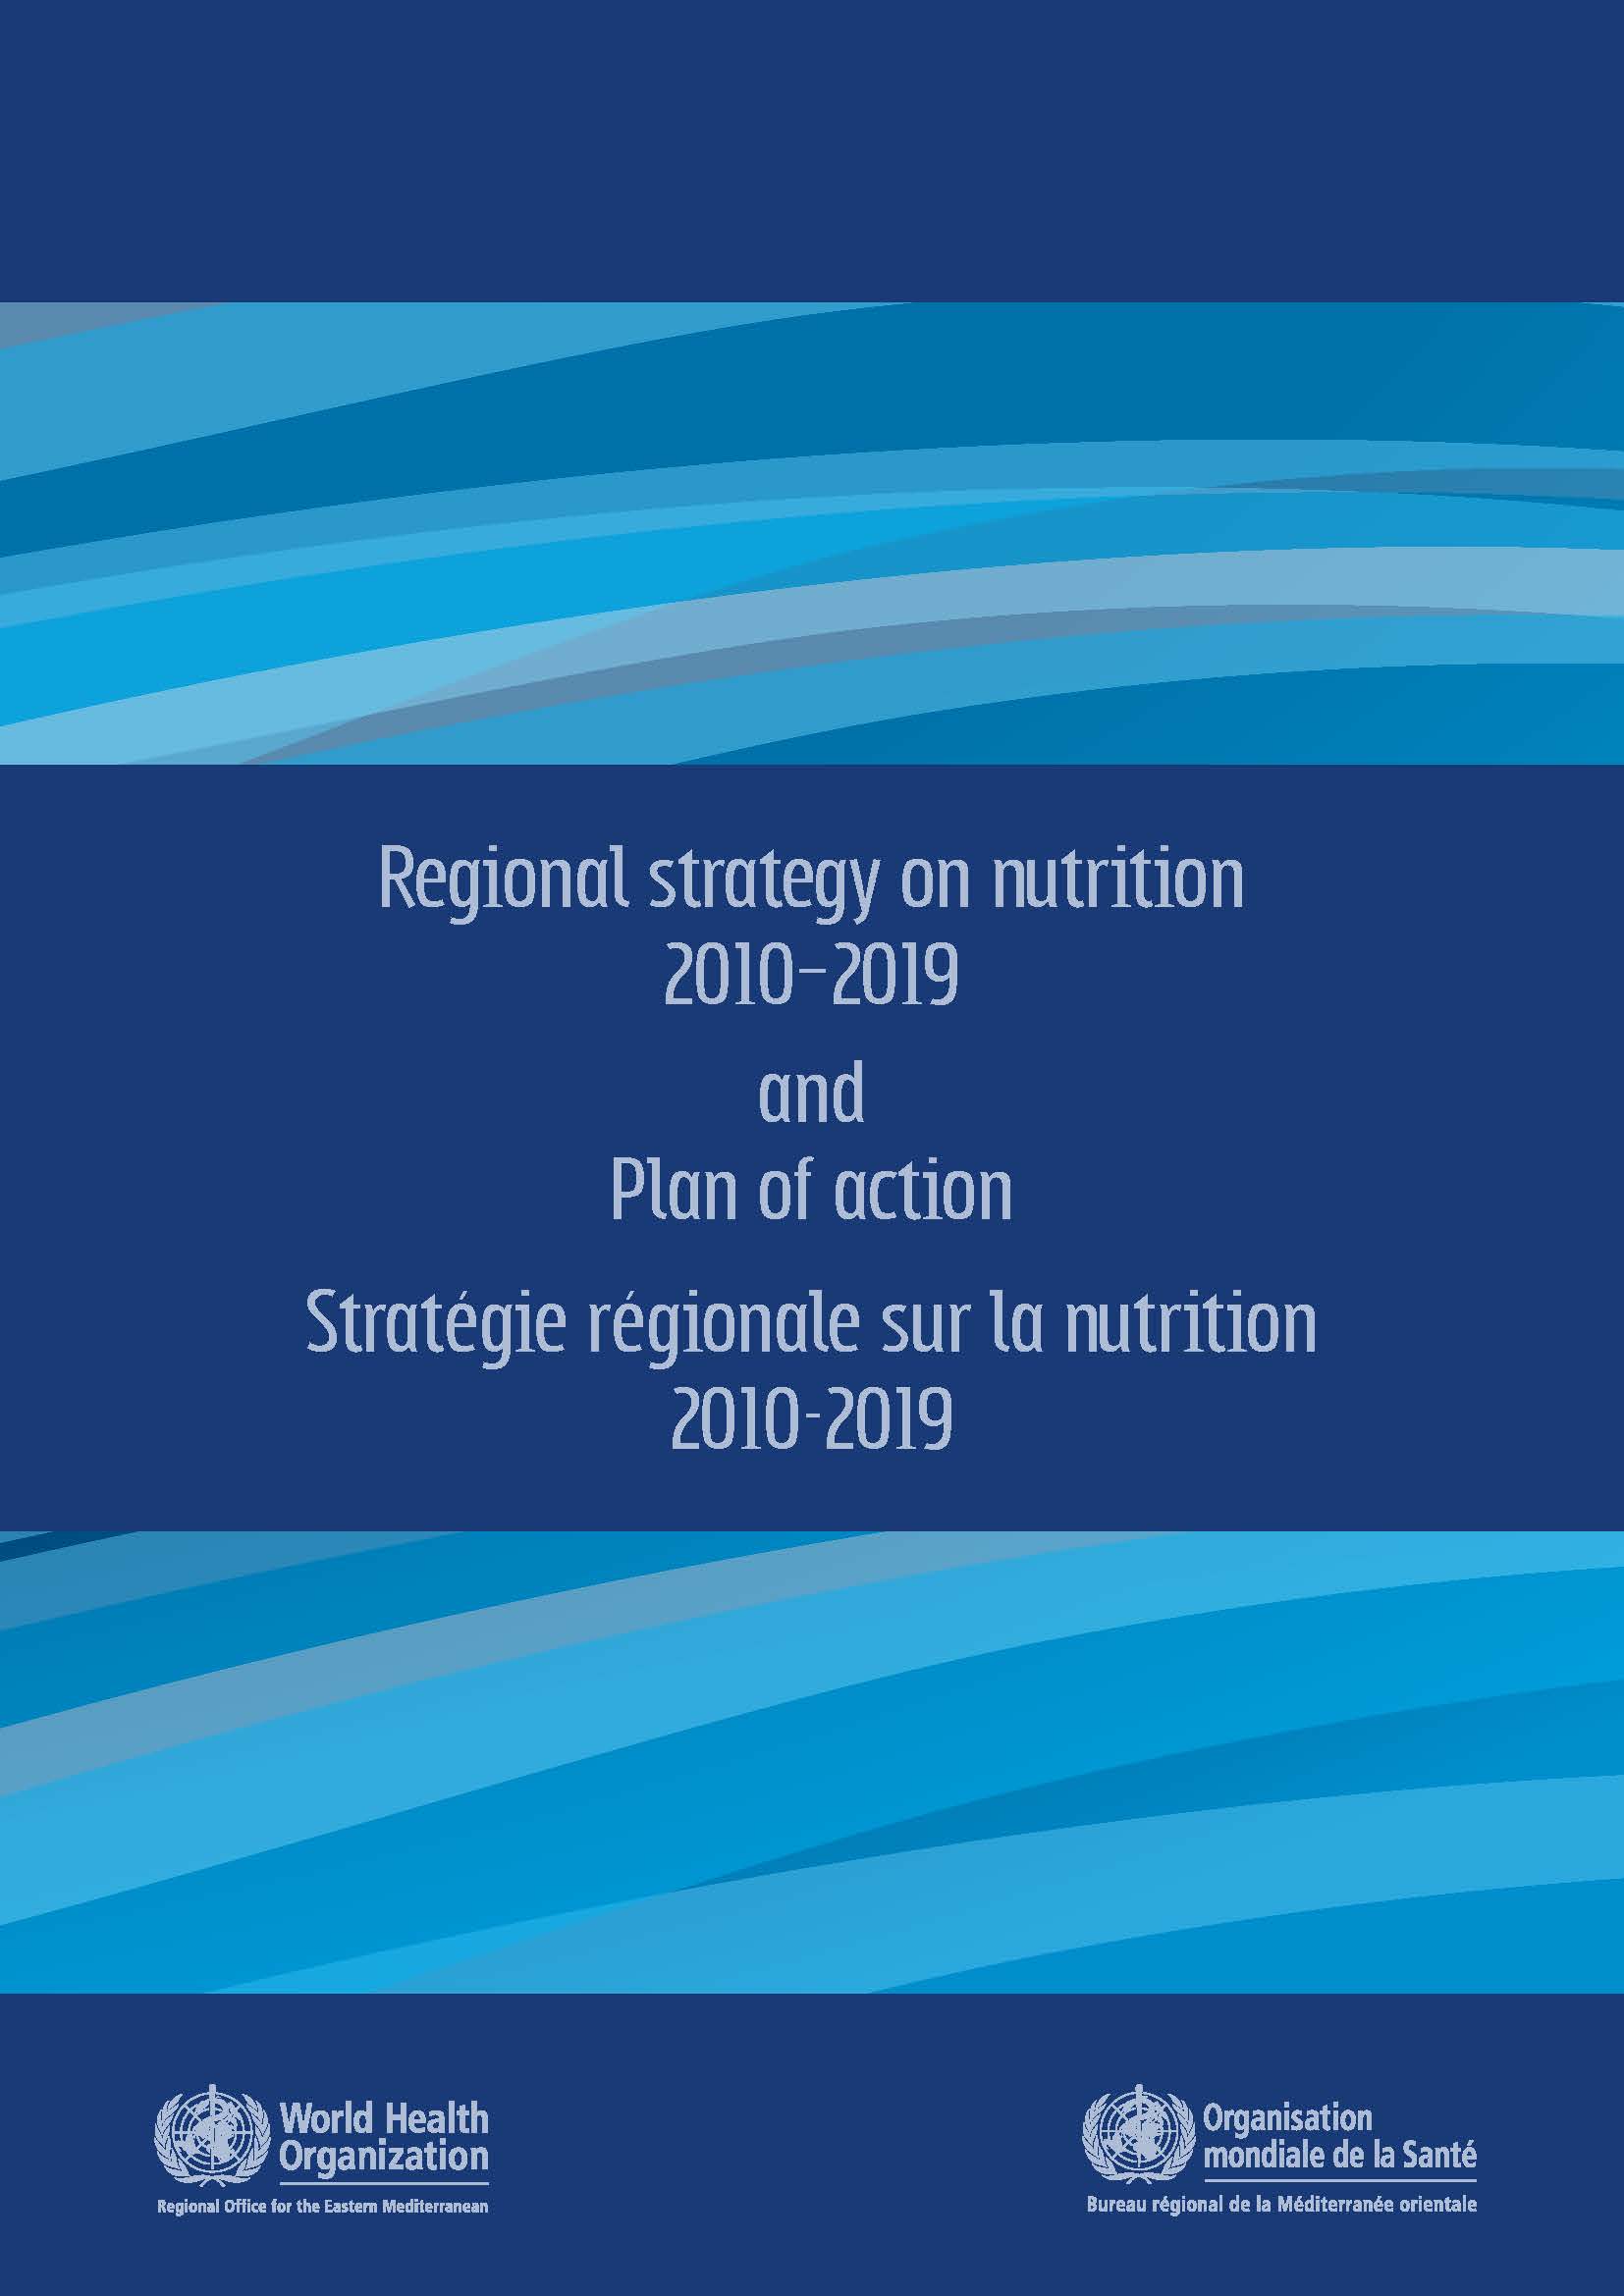 Regional nutrition strategy